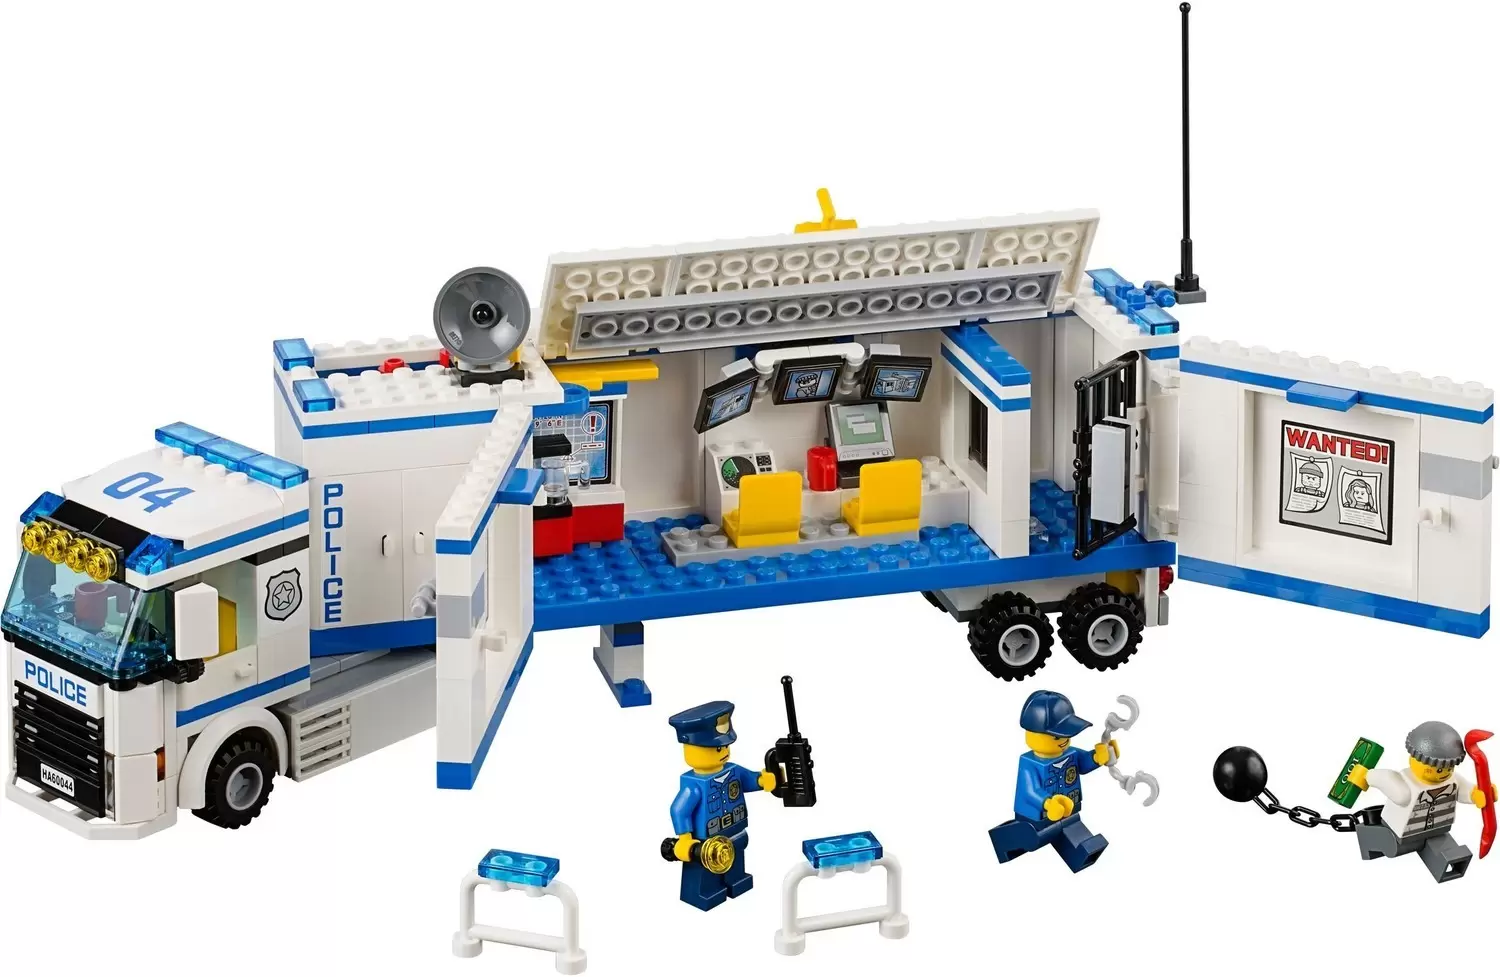 LEGO CITY - Mobile Police Unit